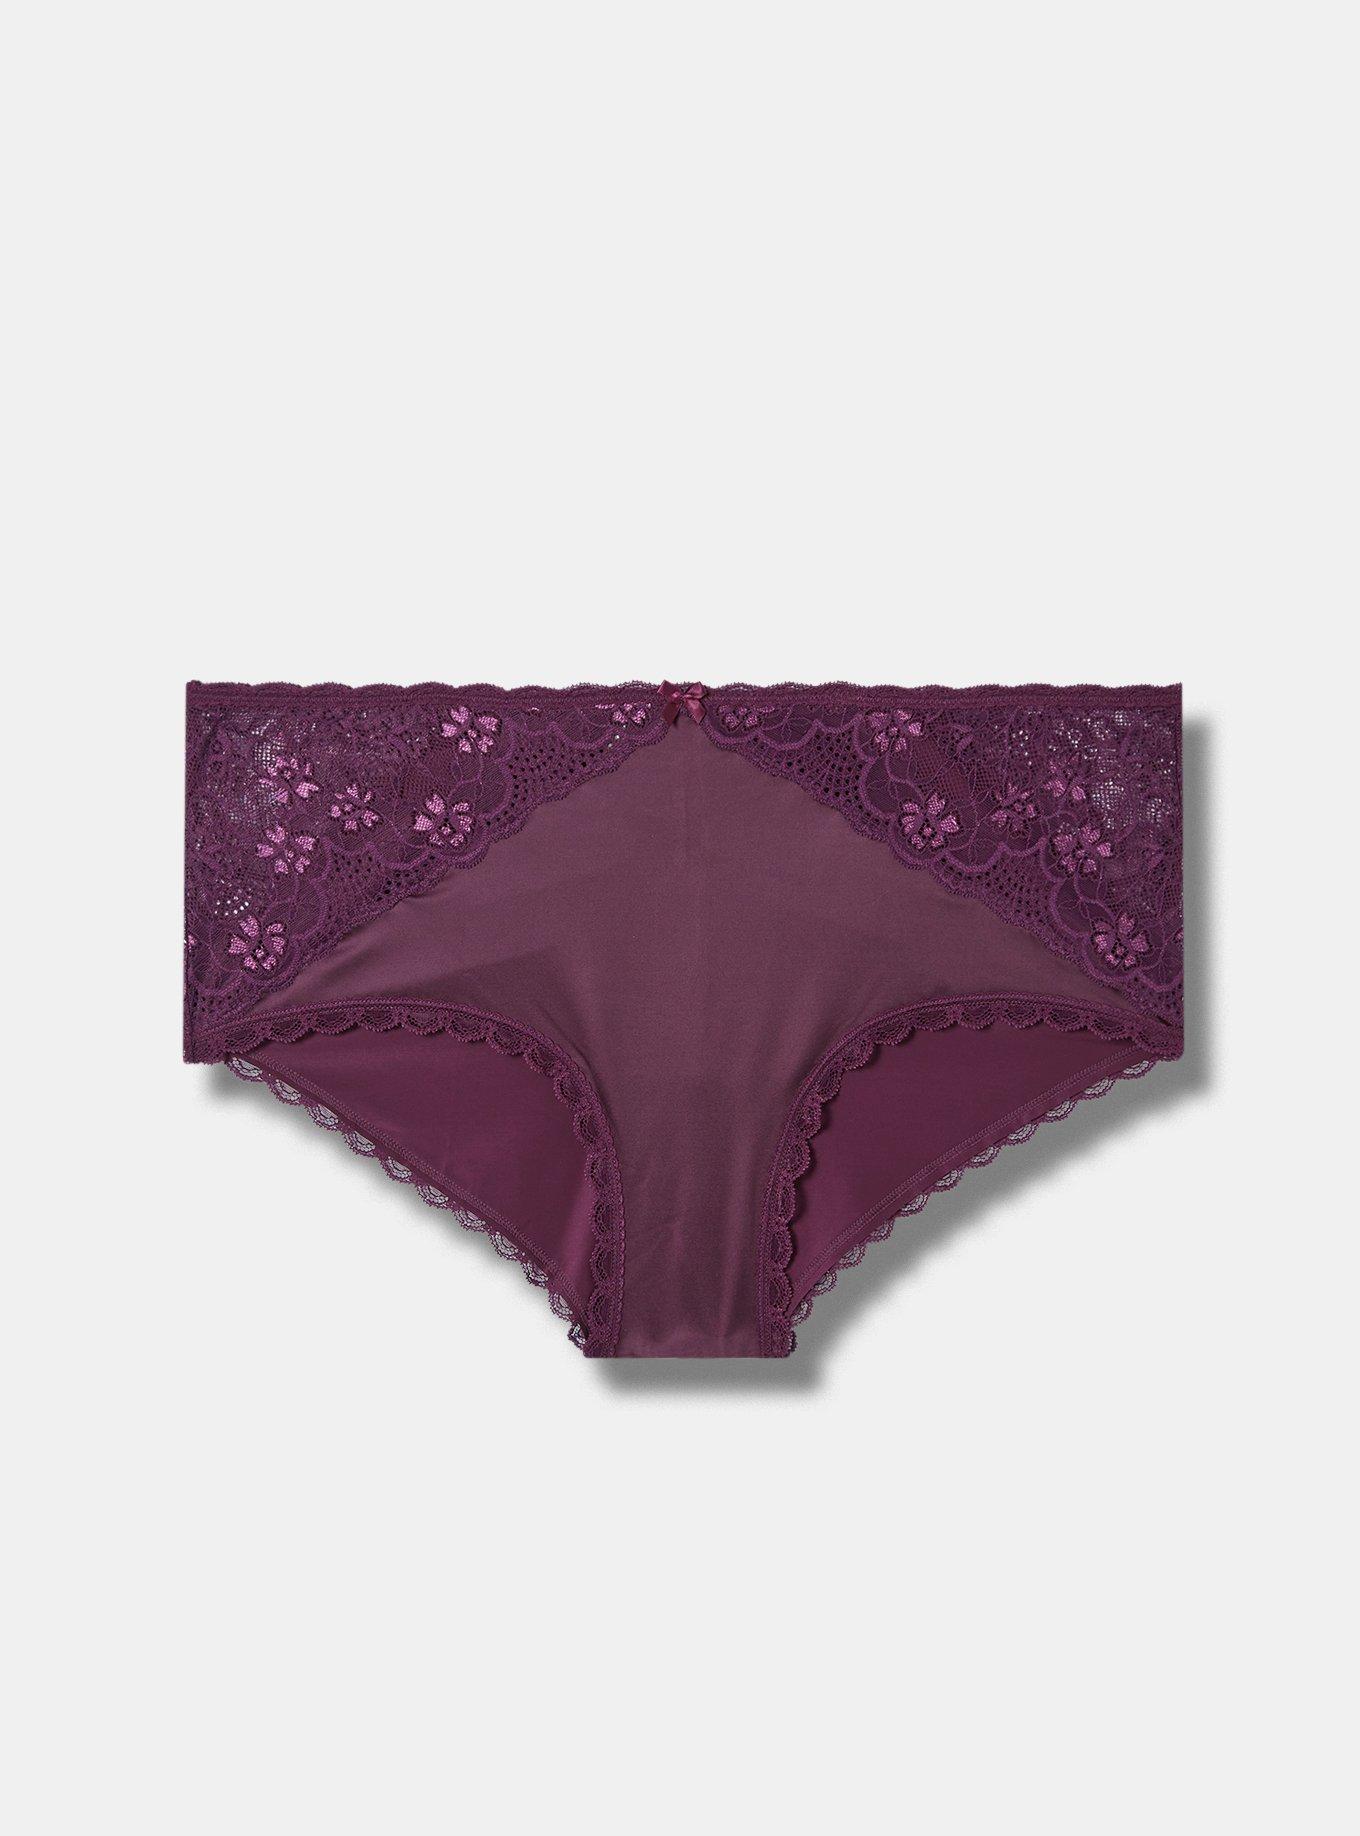 torrid, Intimates & Sleepwear, Torrid Dot Lace Purple Pink Bra 44c